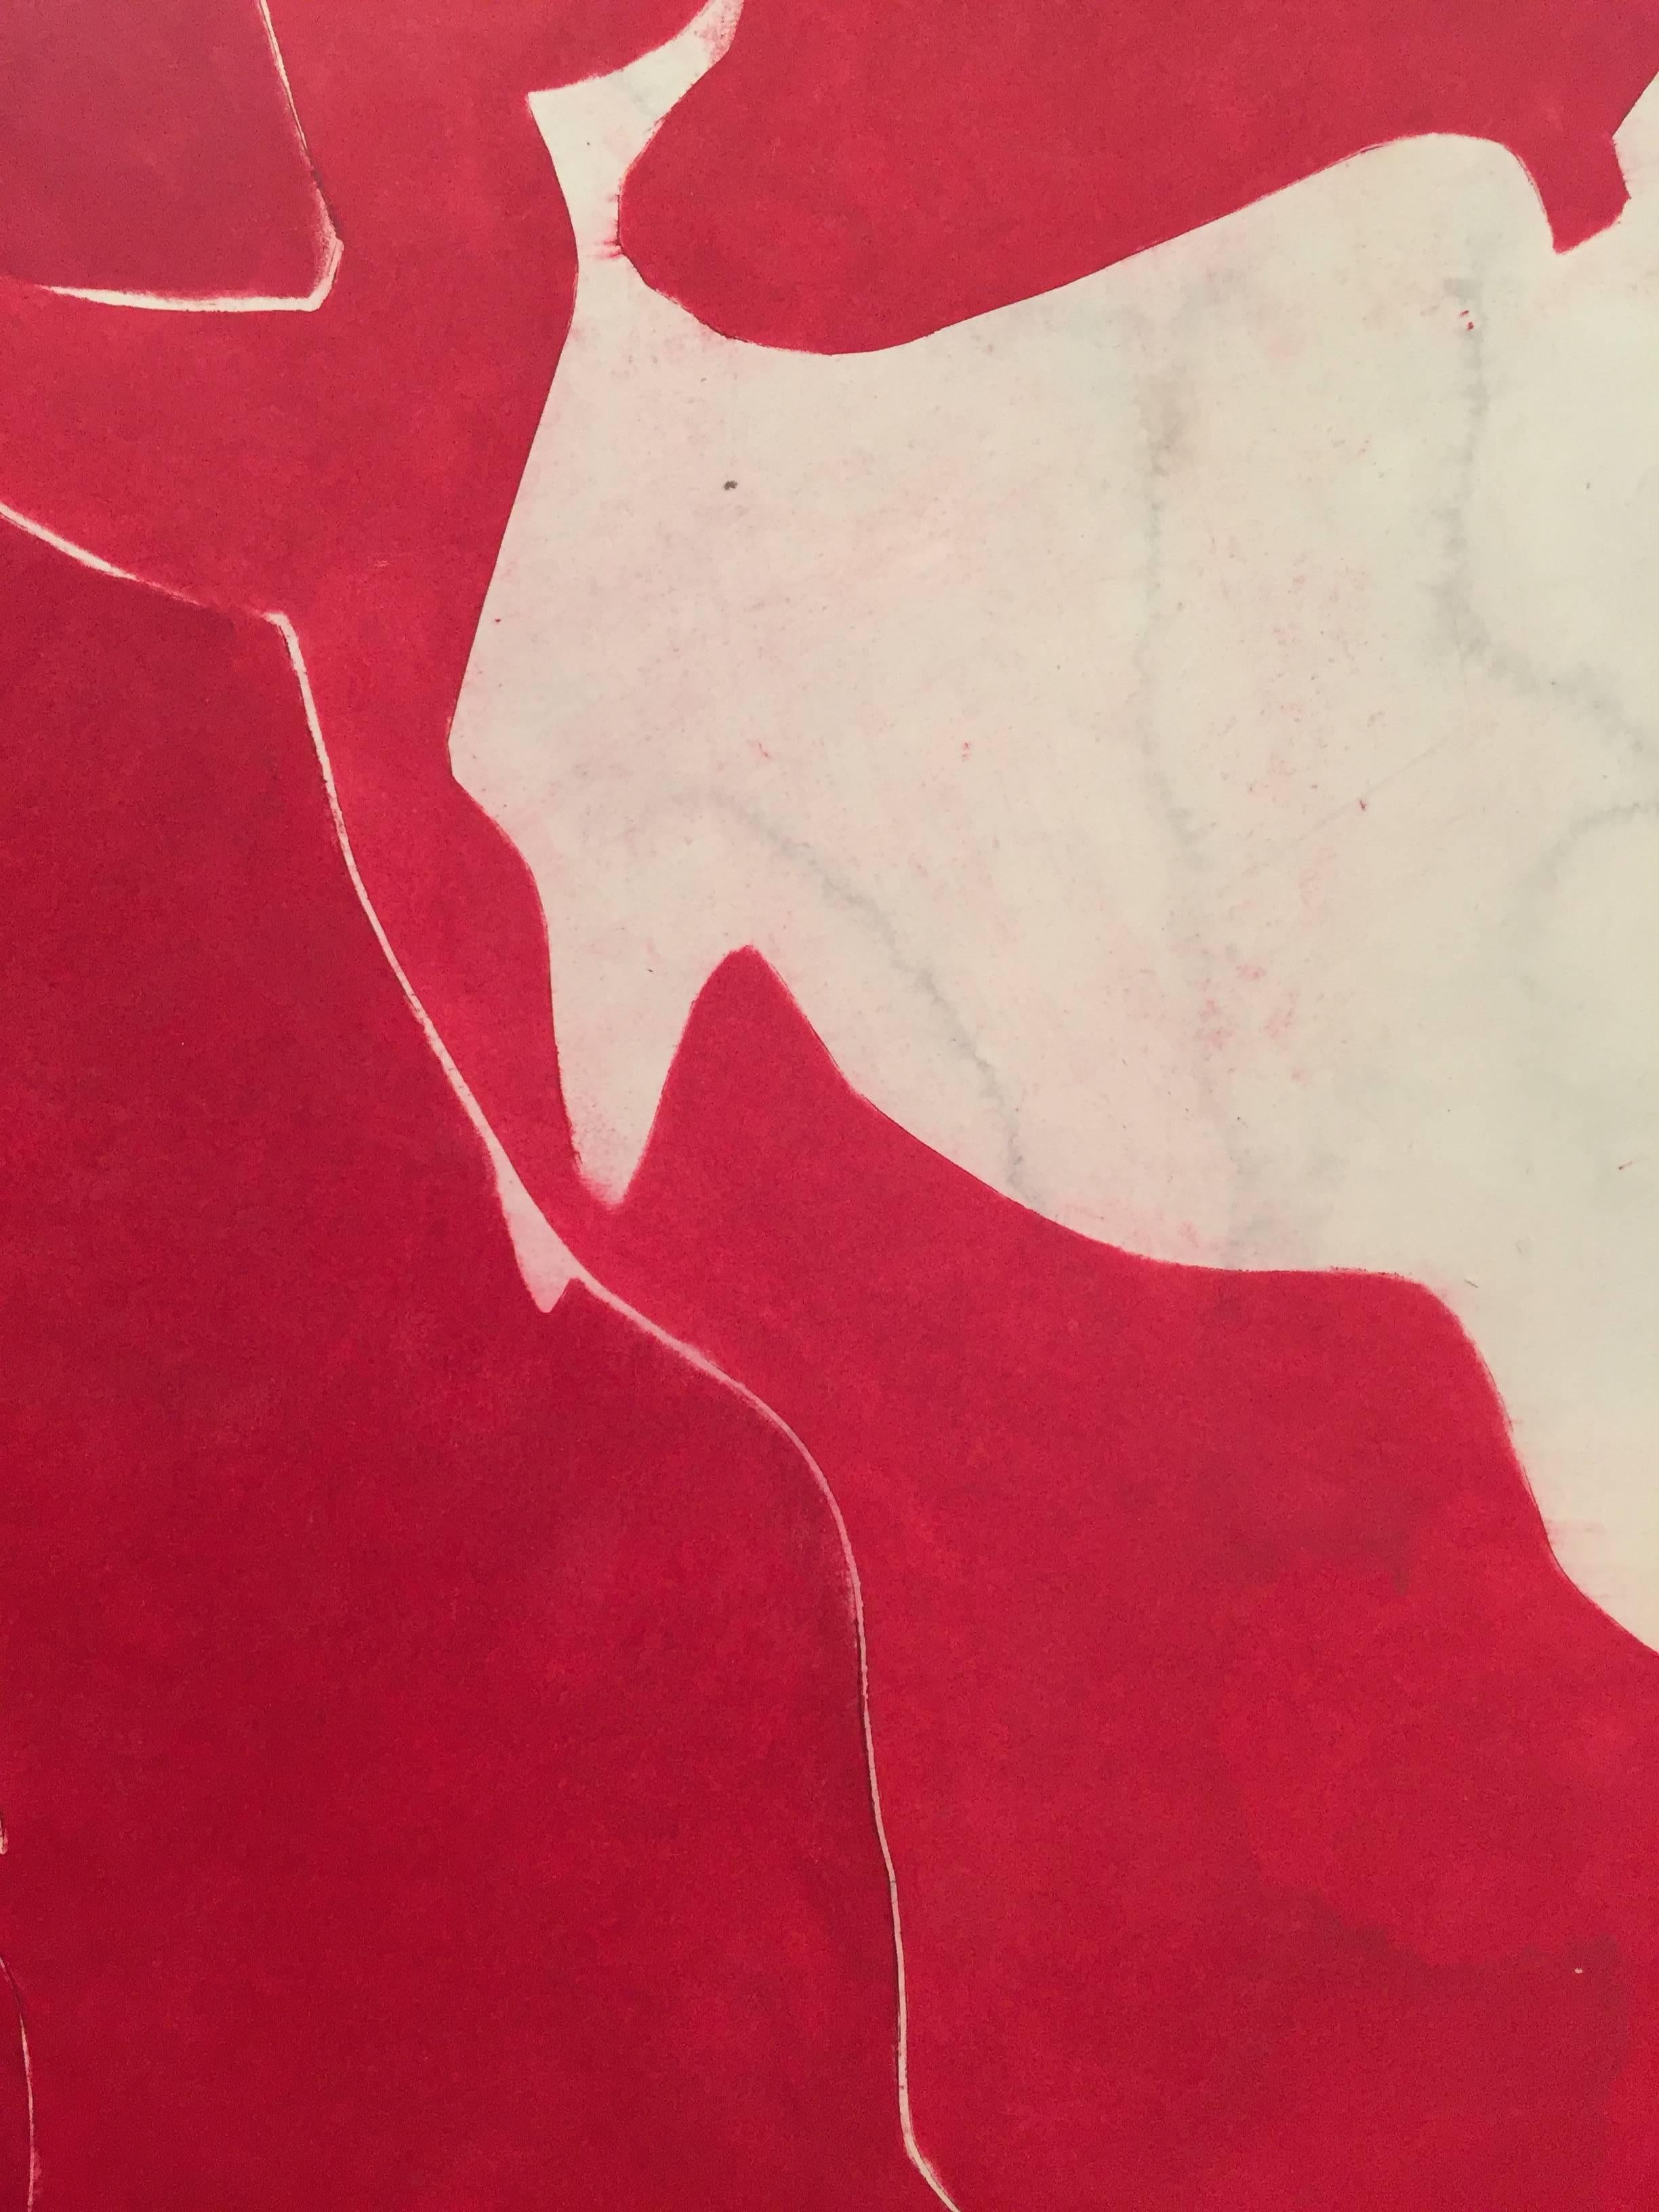 Ray Kass, Still Life 5-16-2015, abstract mixed media watercolor painting, 2015 2